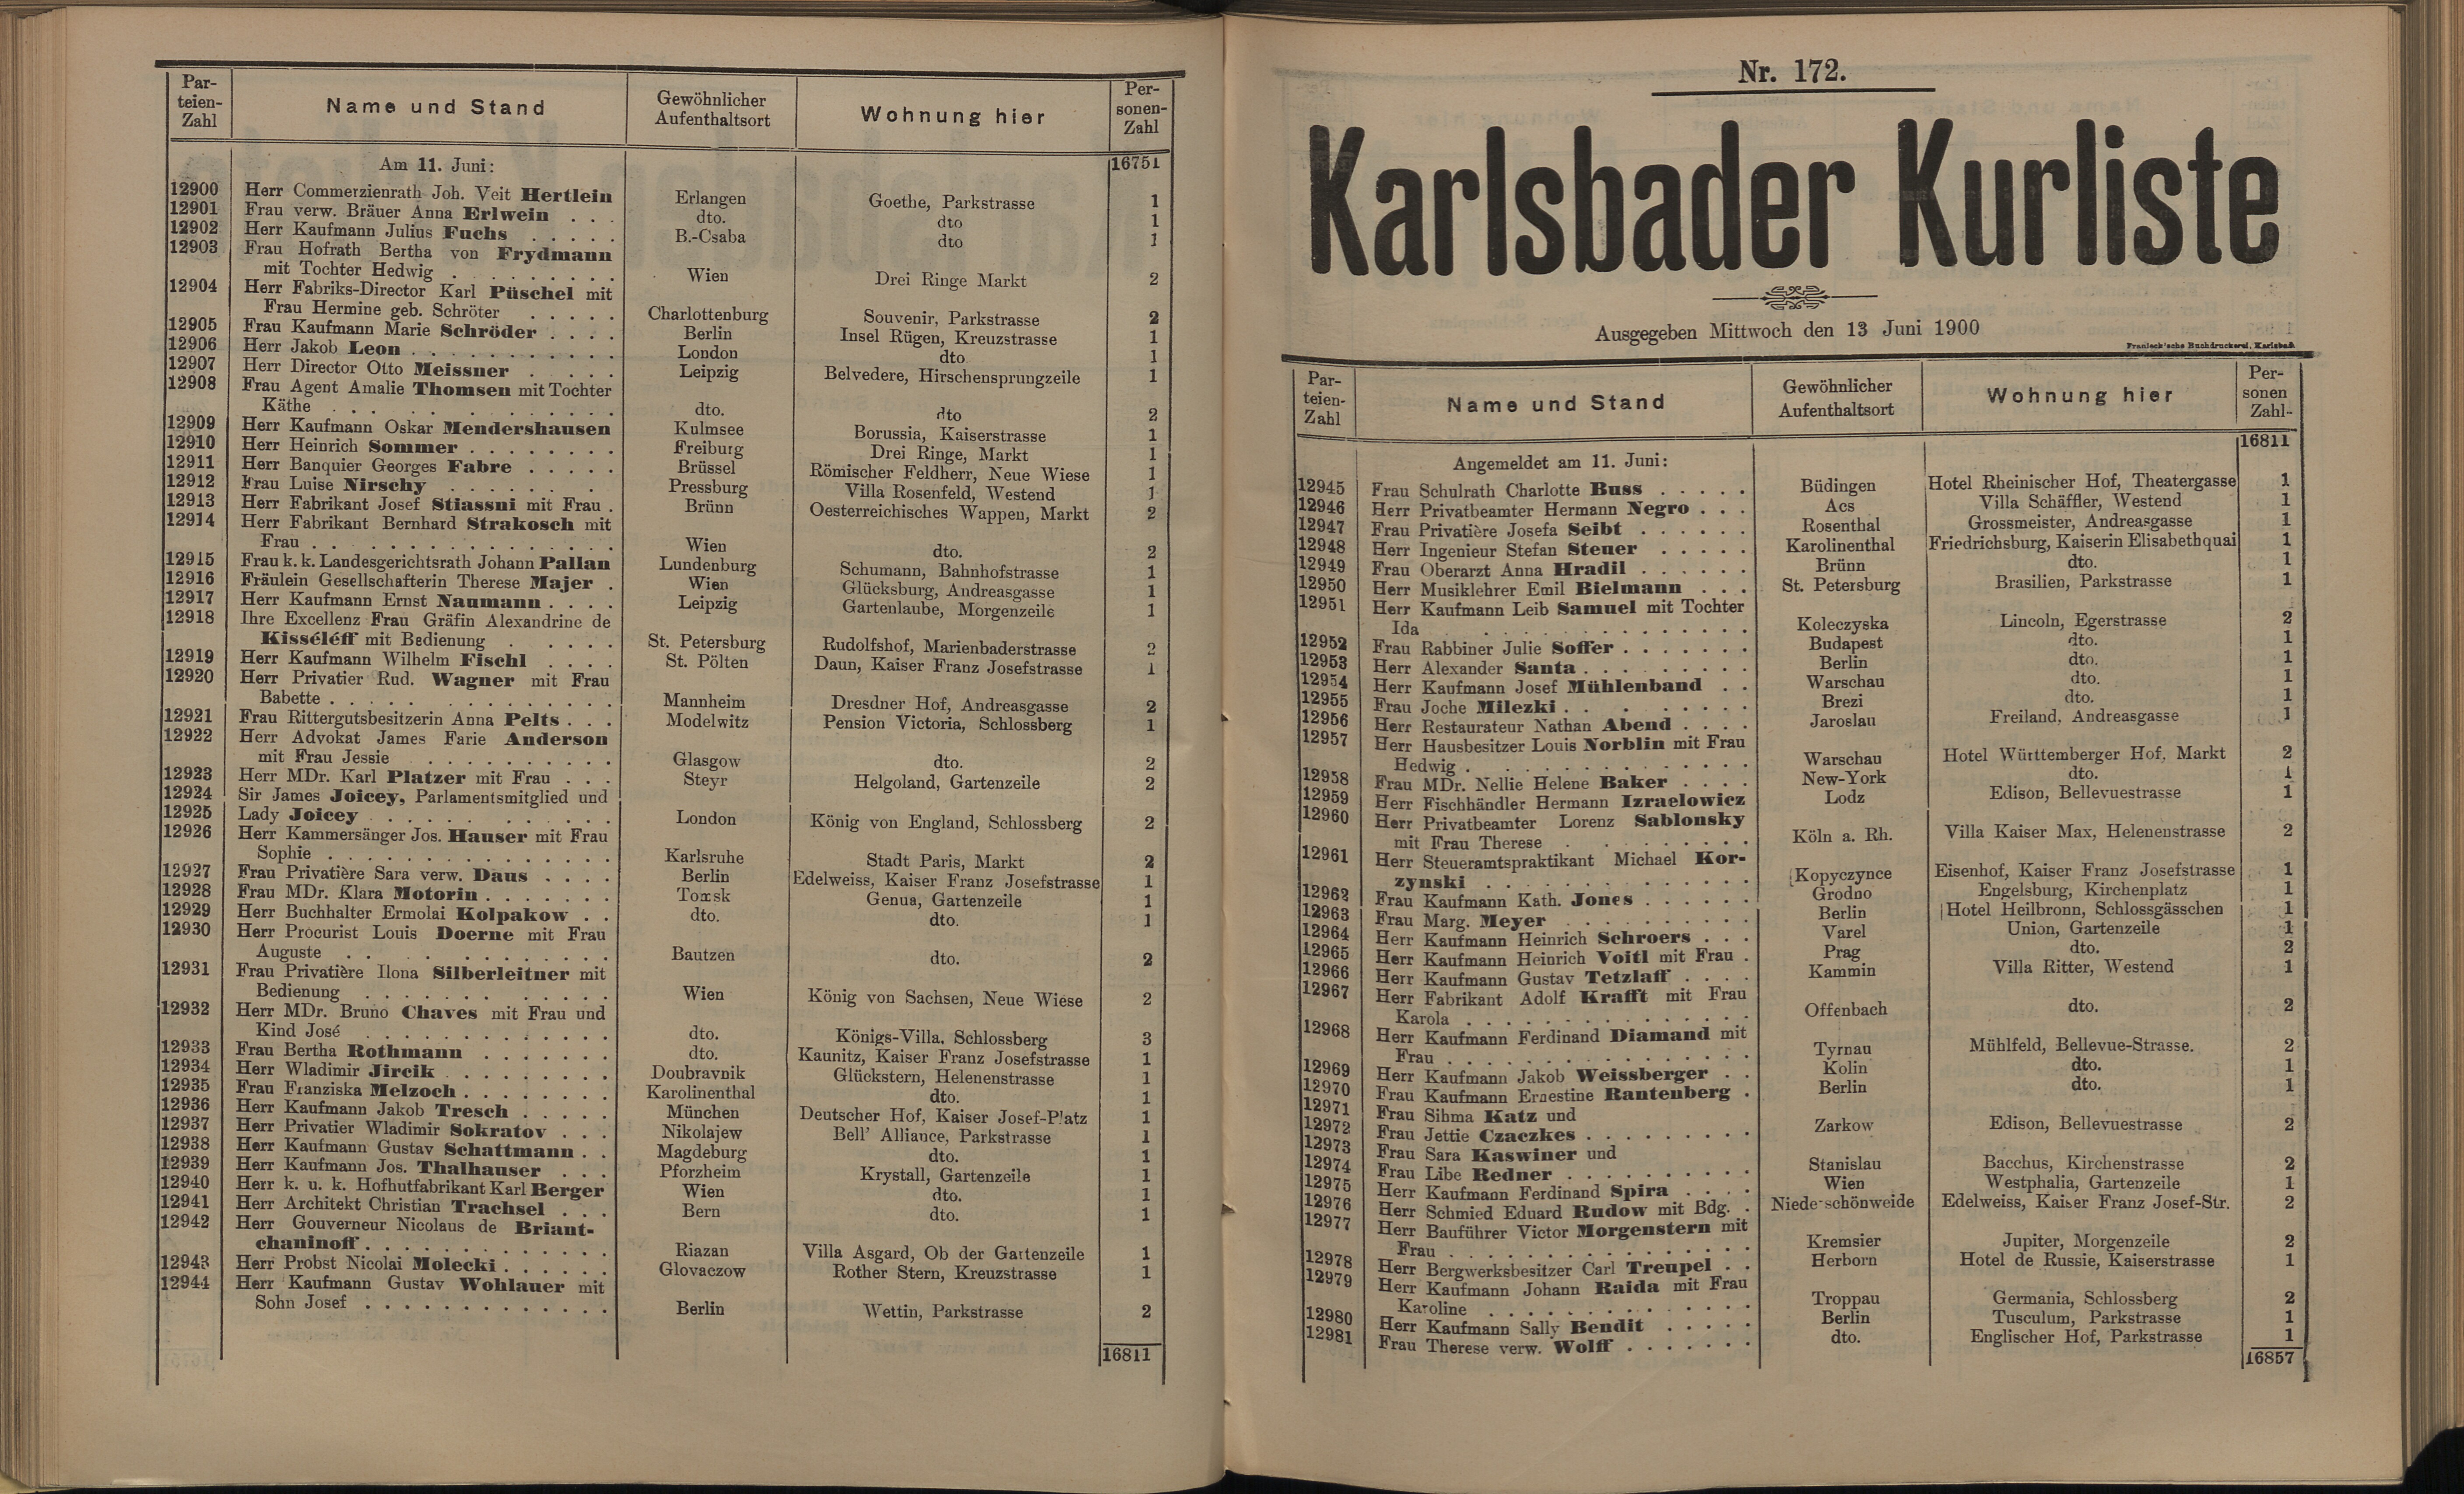 192. soap-kv_knihovna_karlsbader-kurliste-1900_1930